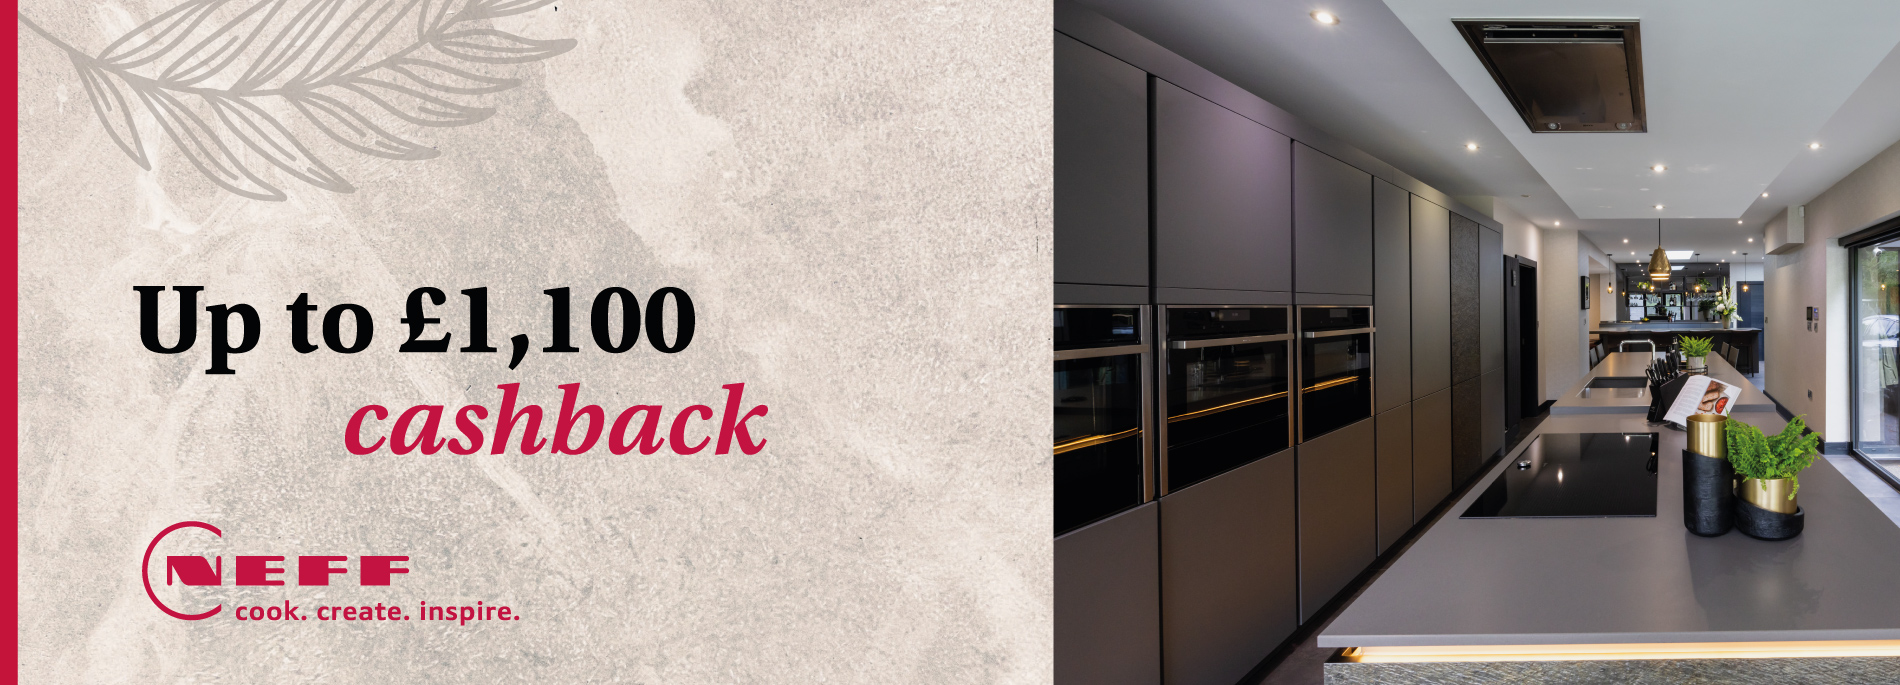 Claim up to £1100 cashback with Neff kitchen appliances!